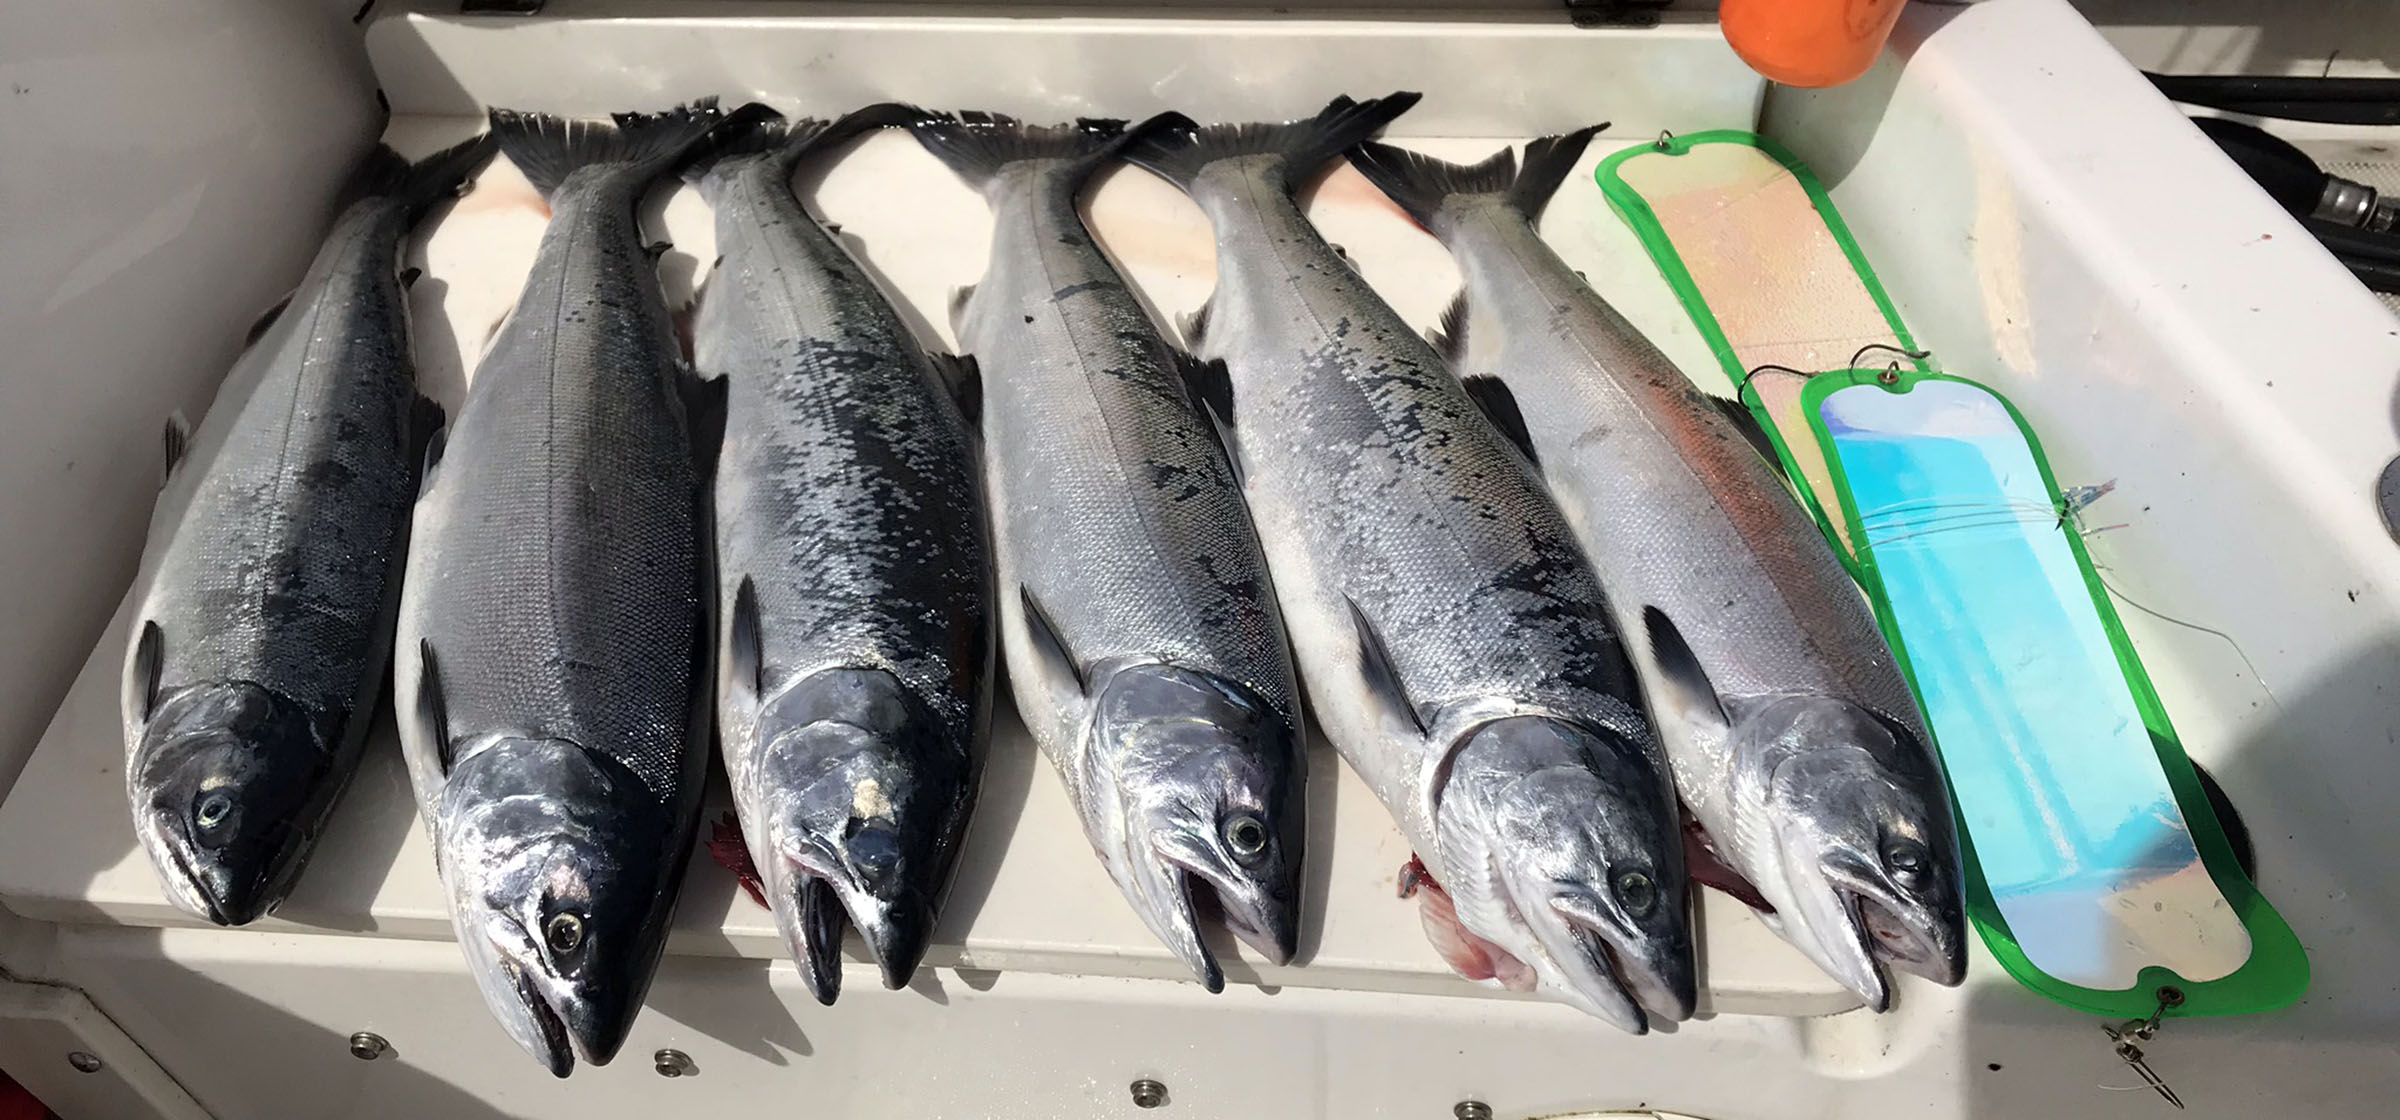 Puget Sound Marine Area 10 Salmon Fishing June 19, 2020